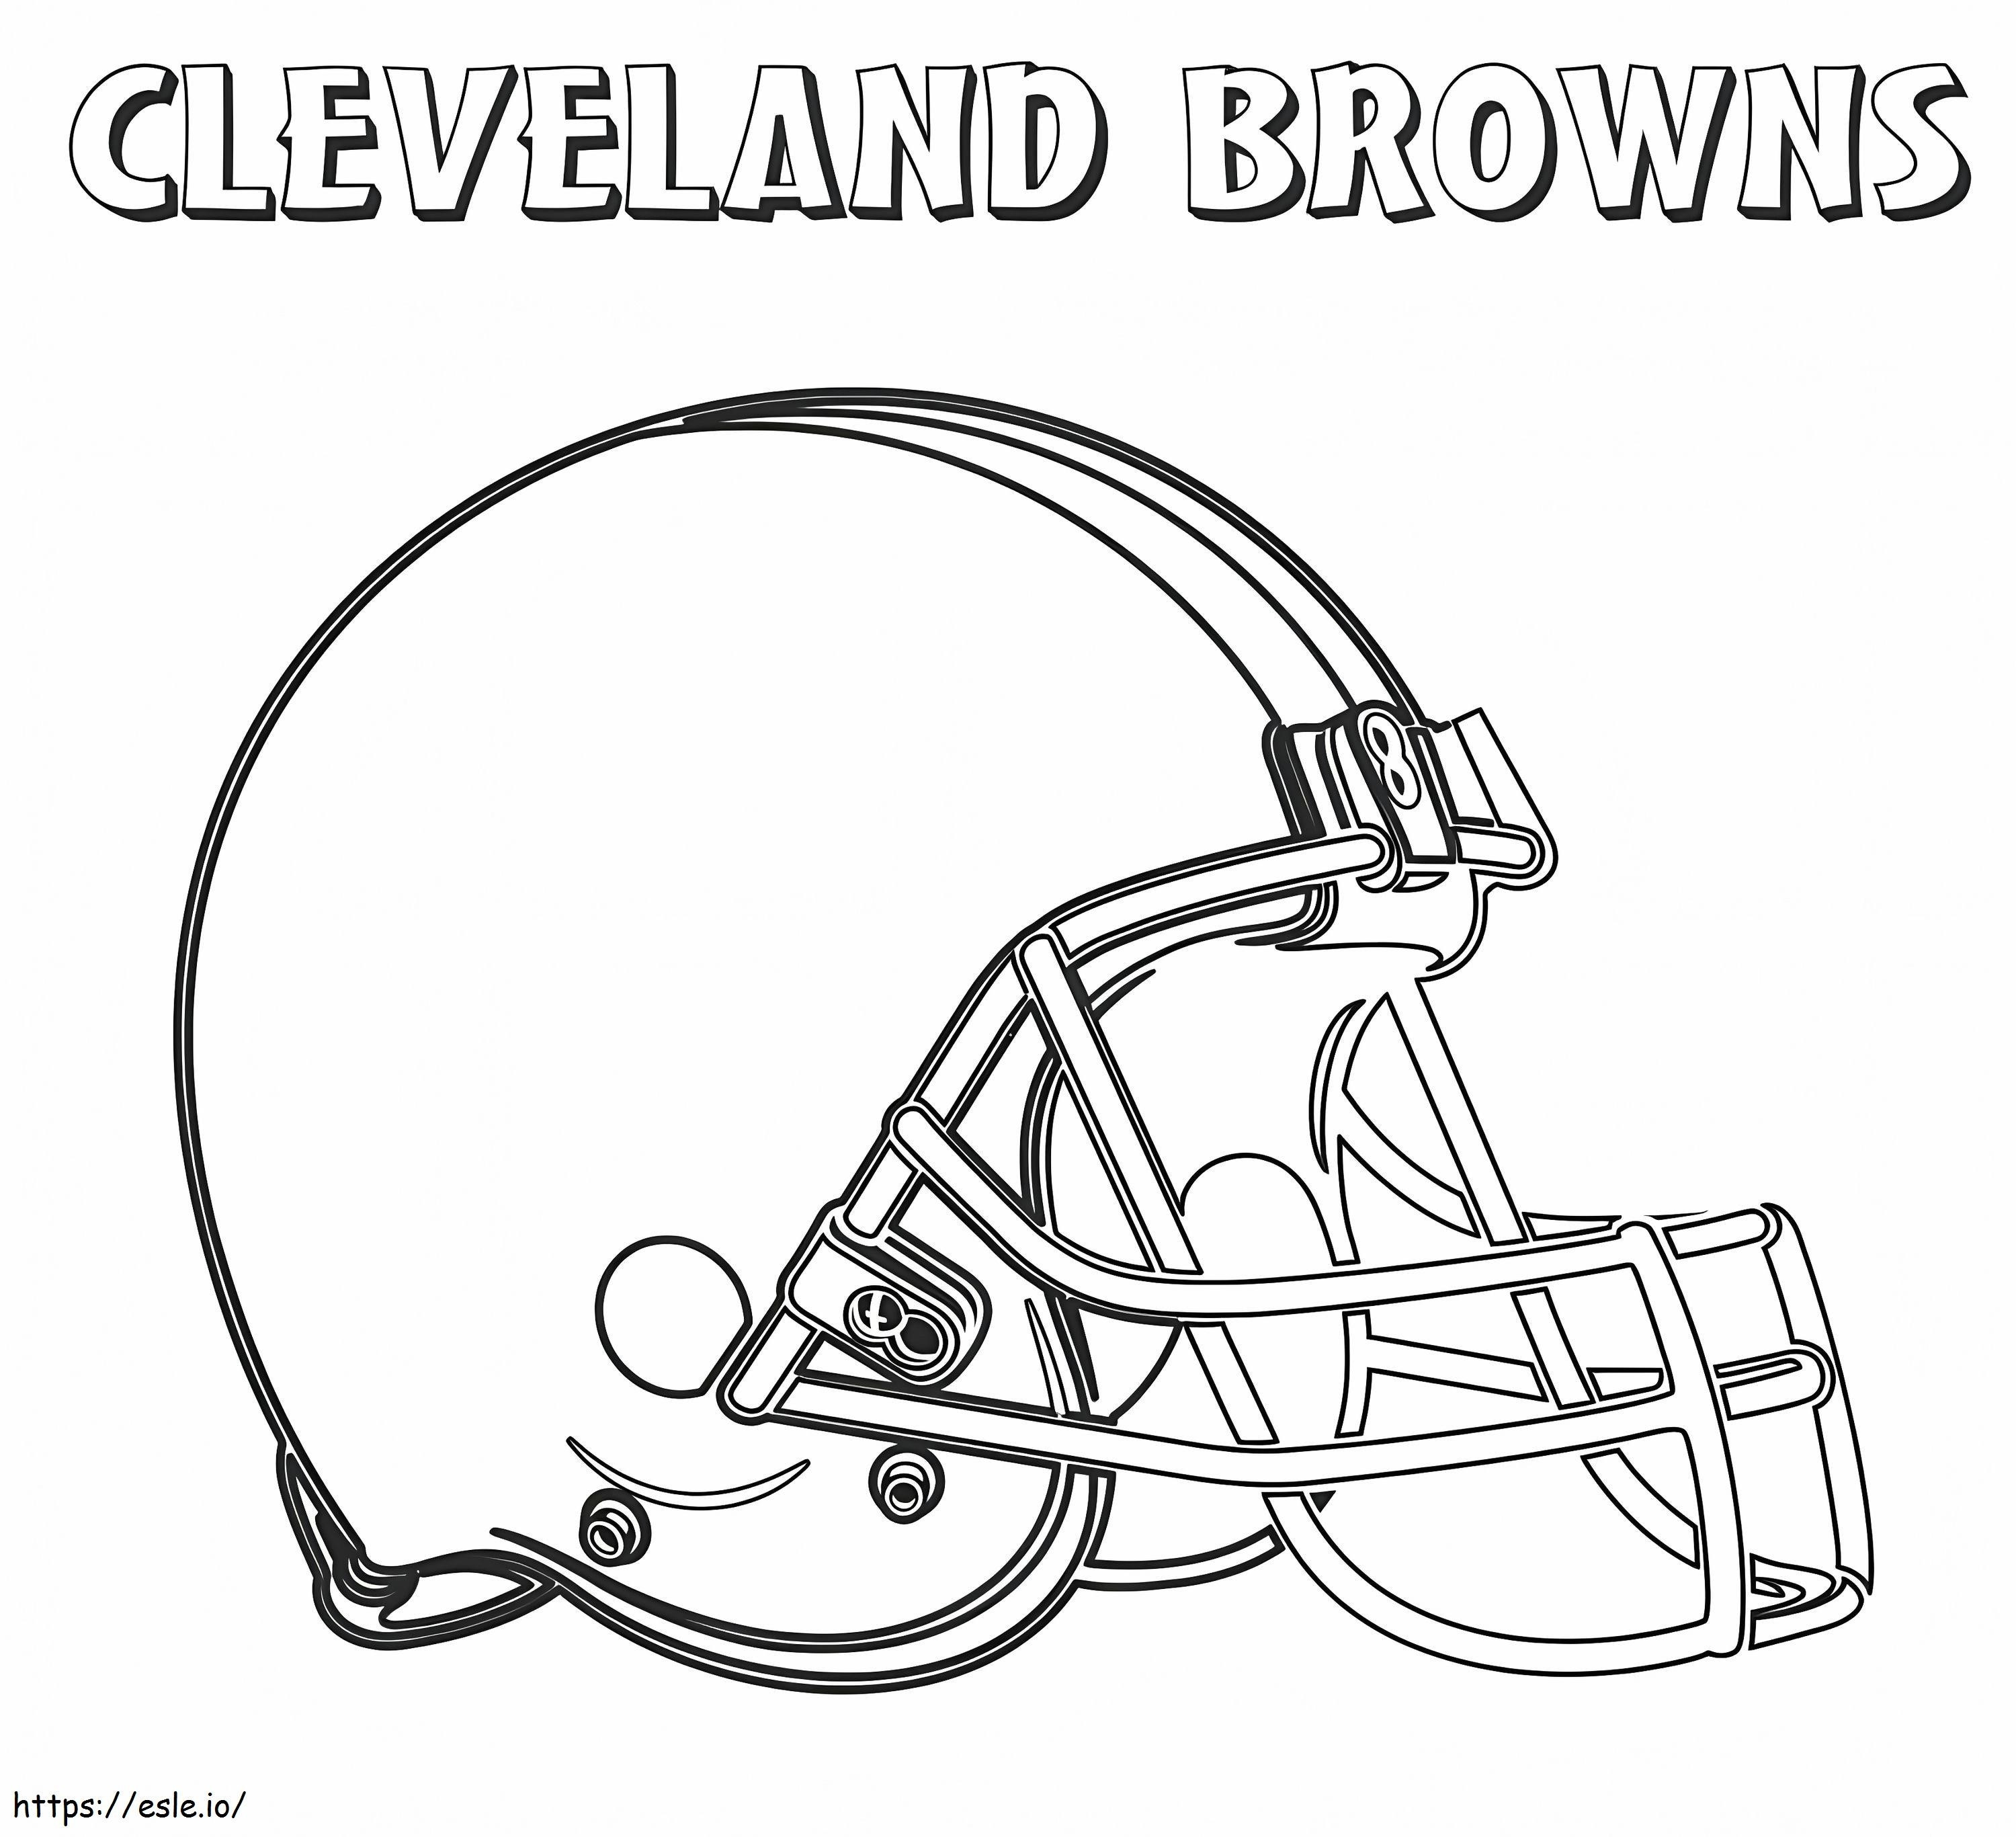 Cleveland Browns 1 boyama